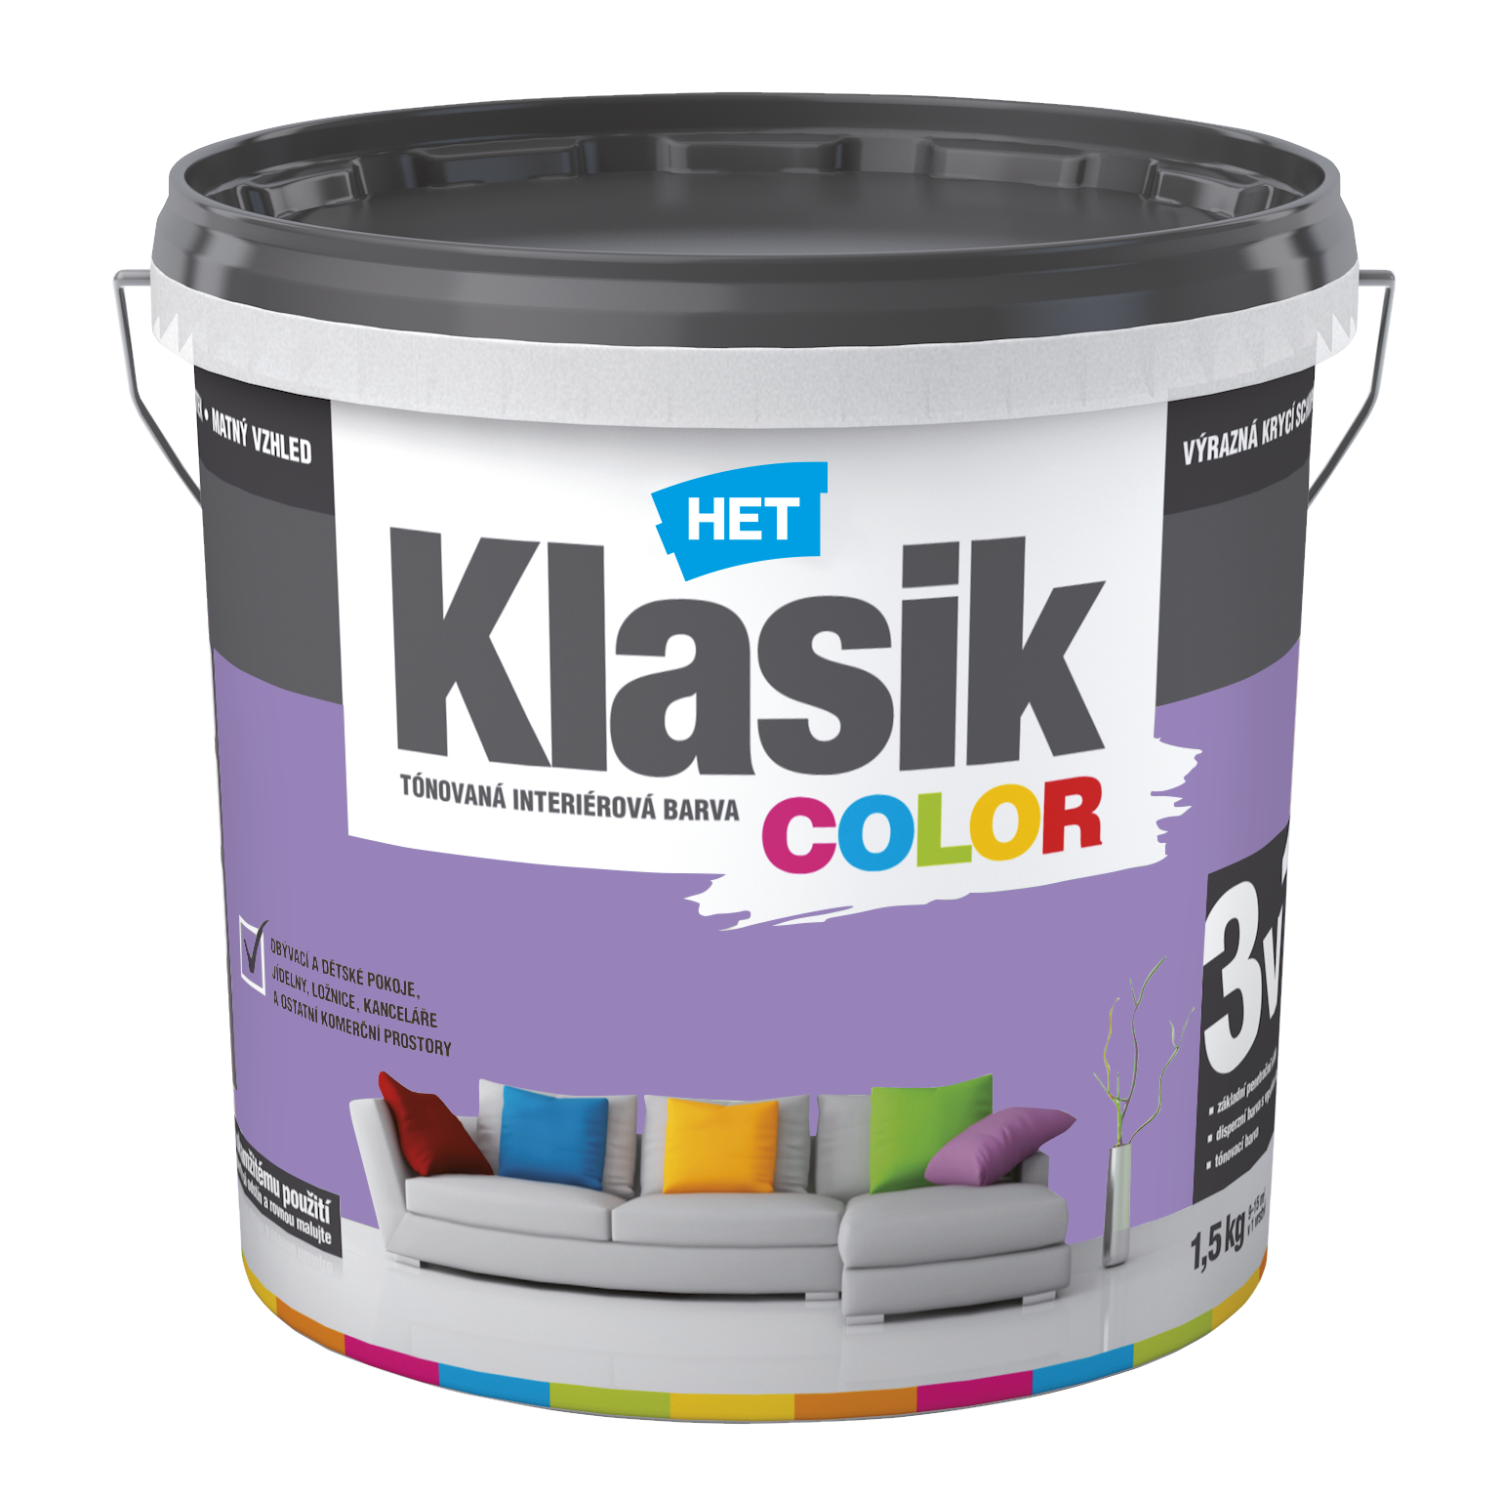 HET Klasik COLOR tónovaná interiérová akrylátová disperzná oteruvzdorná farba 1,5 kg, KC0327 - fialový lila